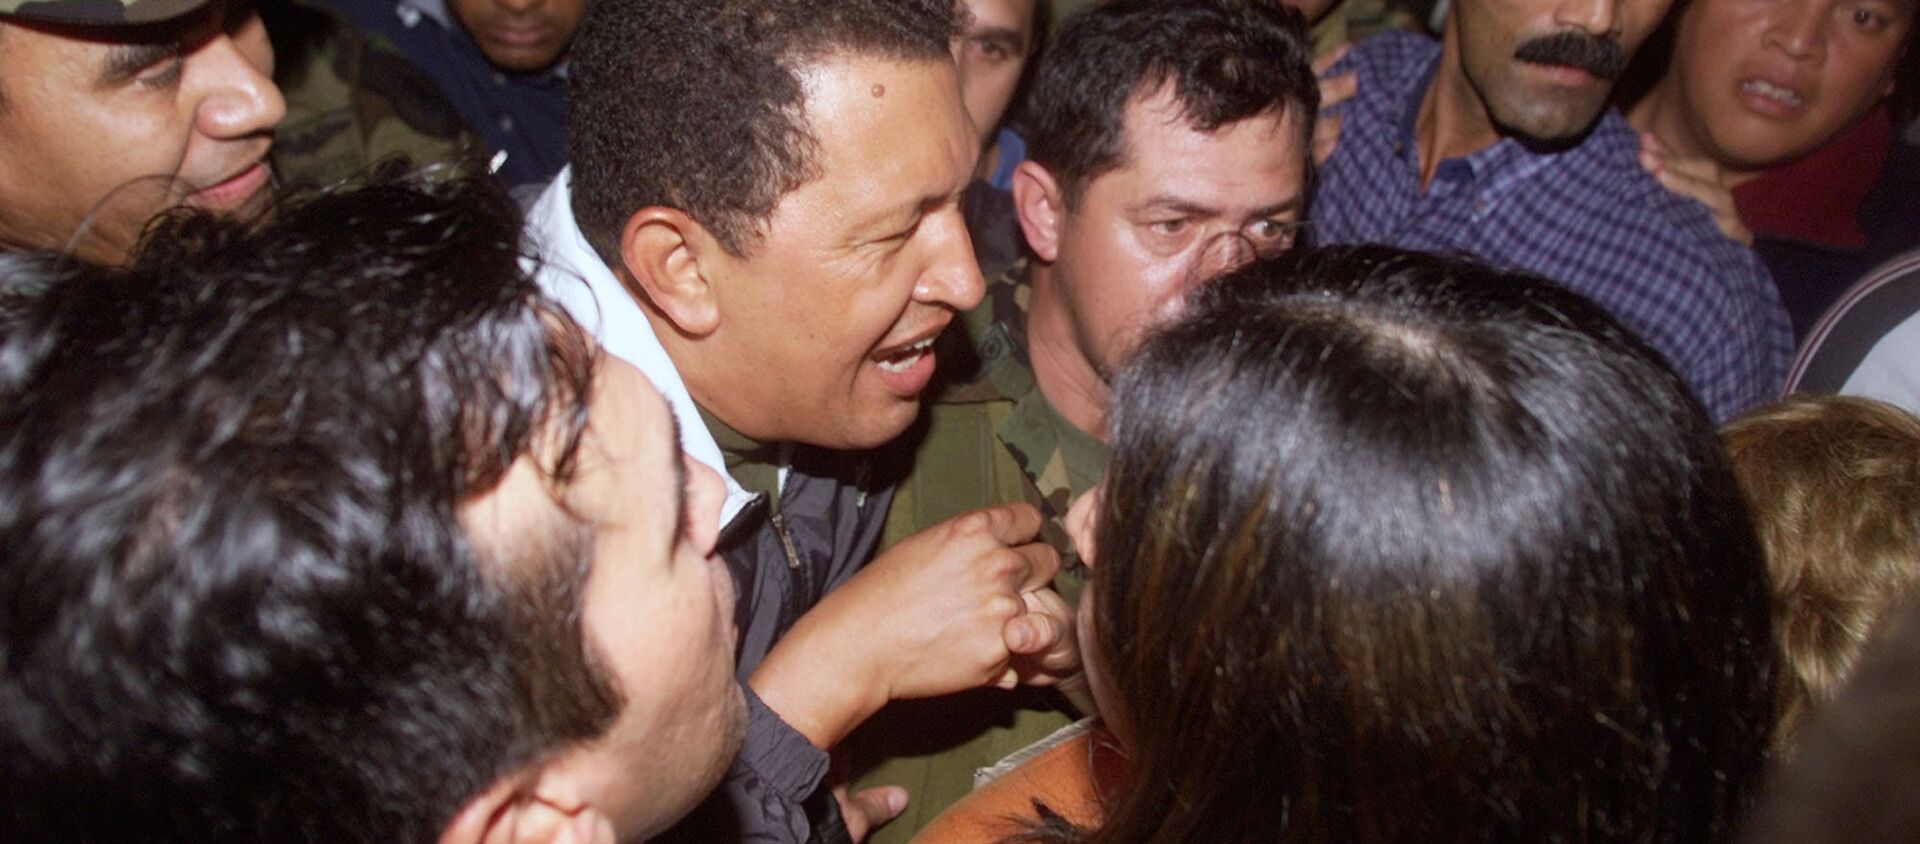 Hugo Chávez vuelve al palacio de Miraflores, 14 de abril de 2002 - Sputnik Mundo, 1920, 27.01.2019